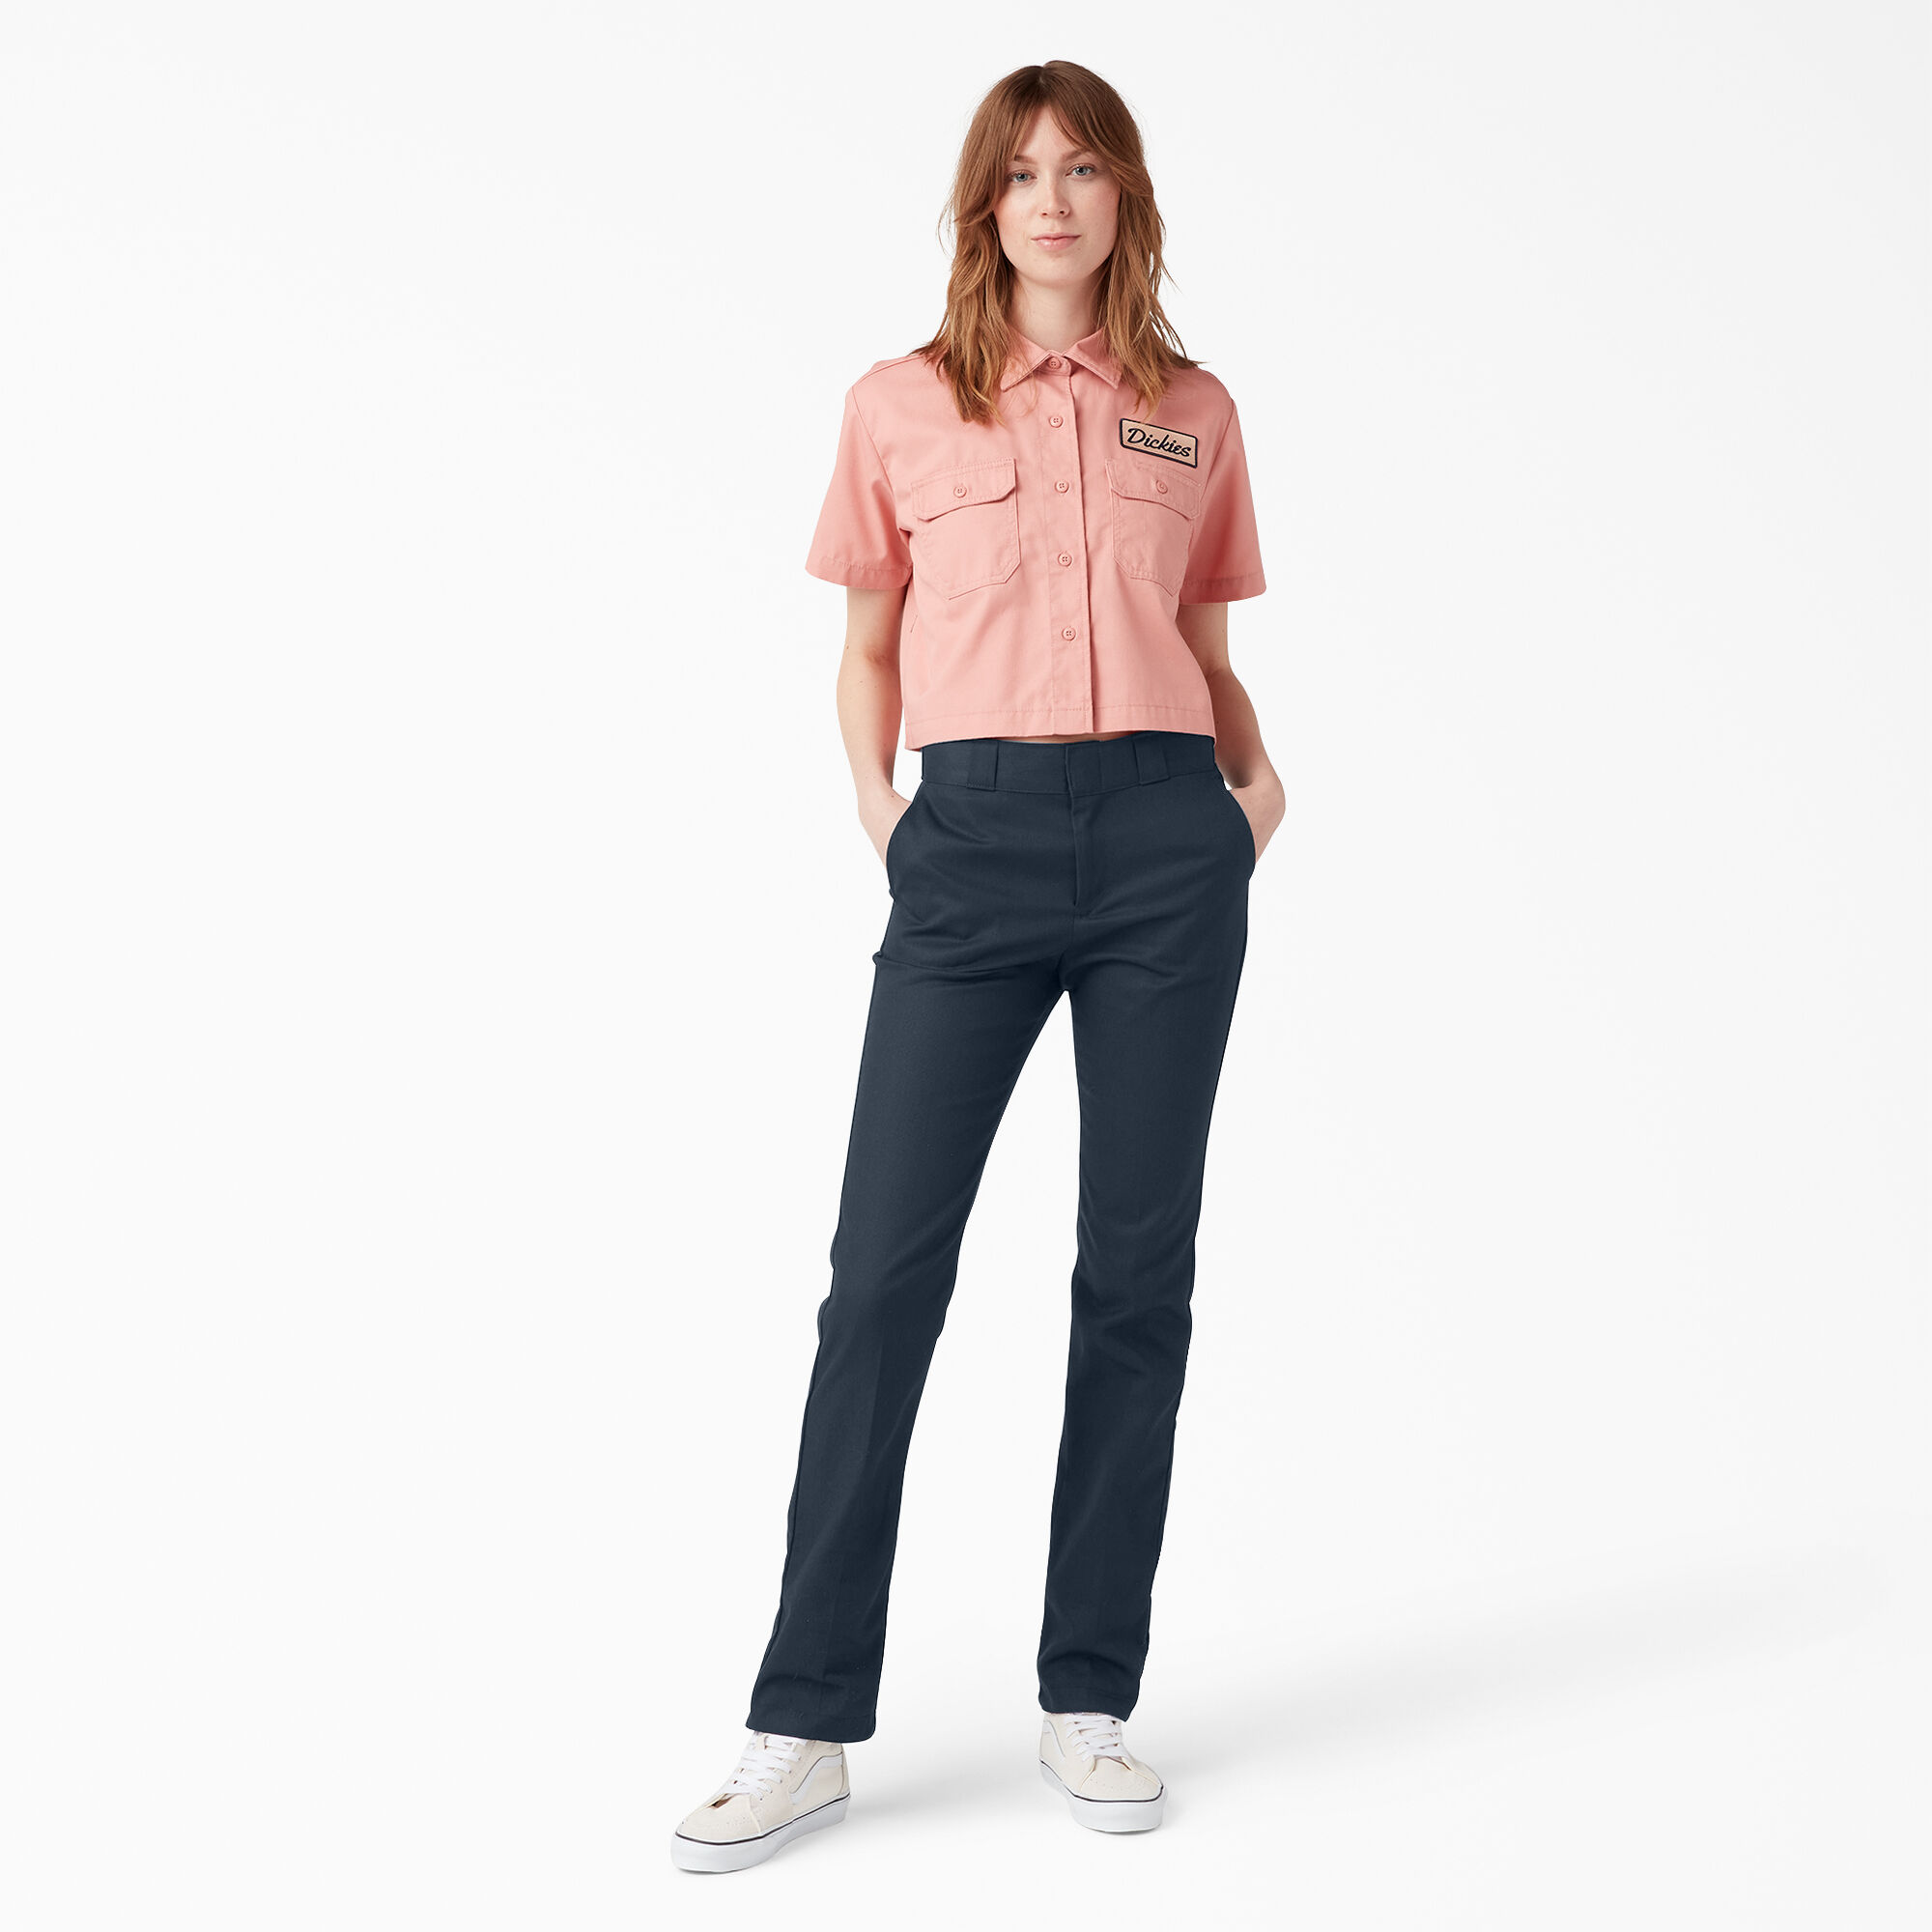 Women's FLEX Slim Fit Work Pants